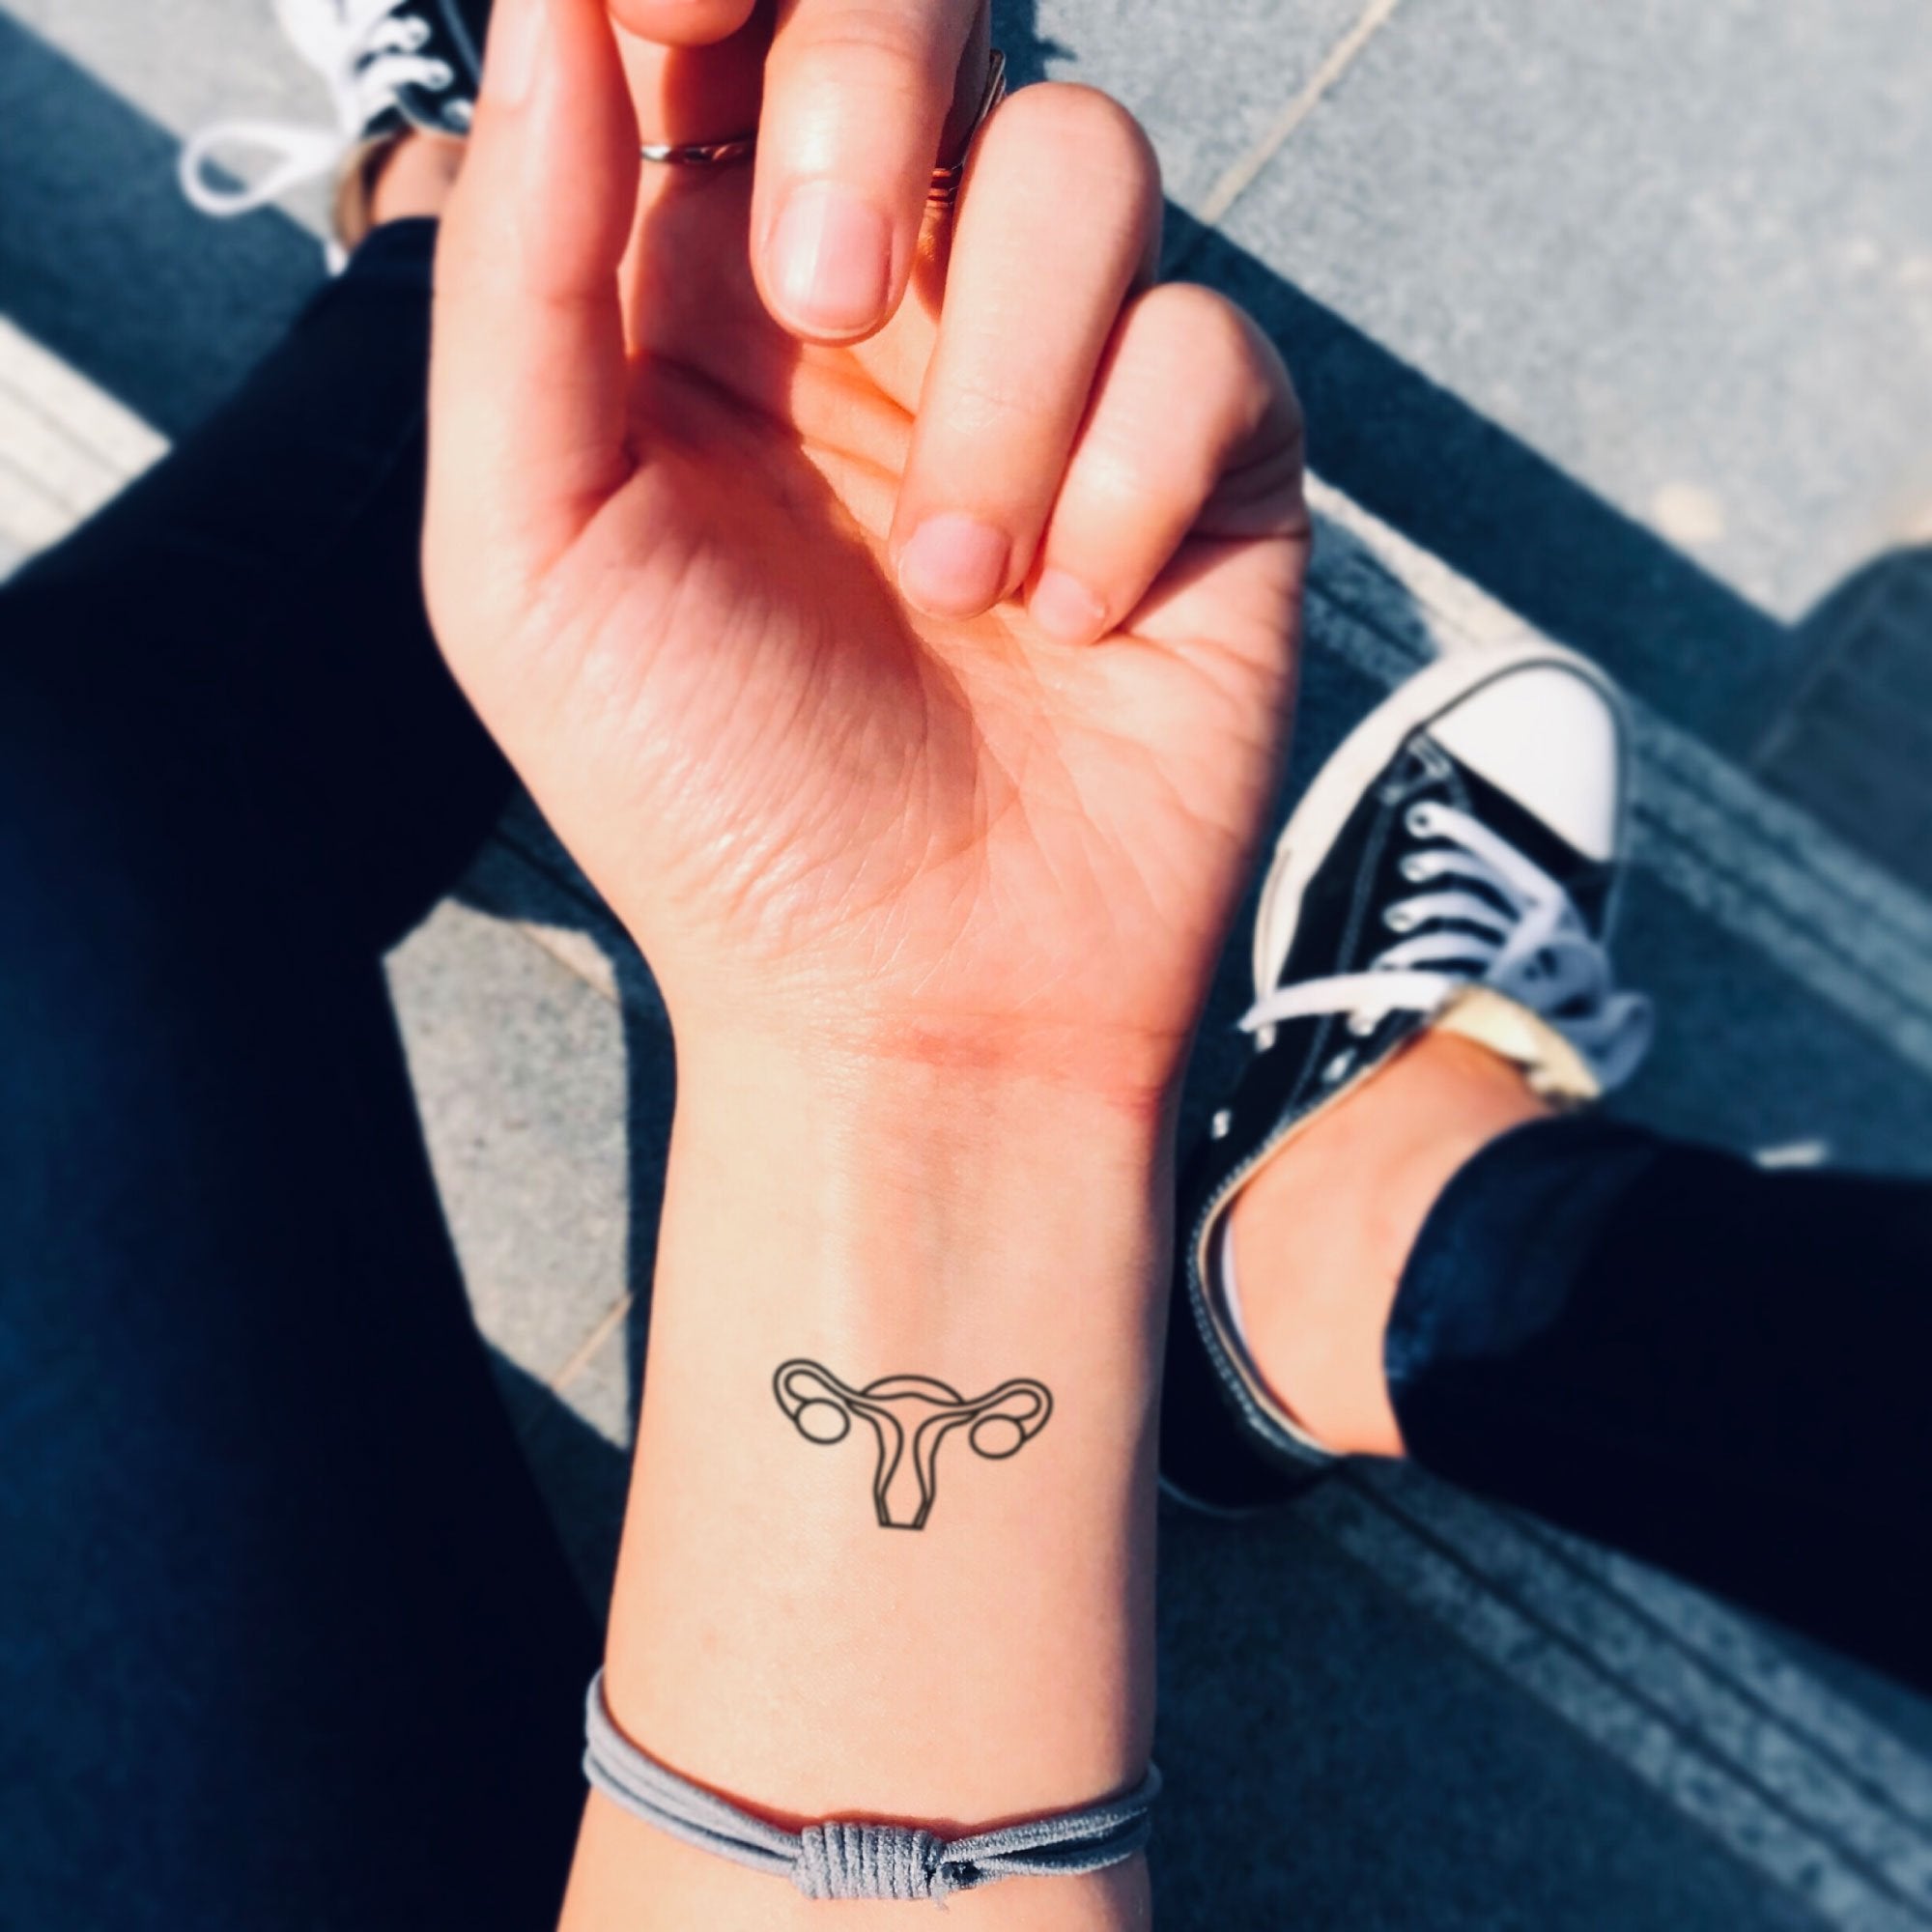 Small Uterus Minimalist Temporary Tattoo Sticker Design Idea Wrist